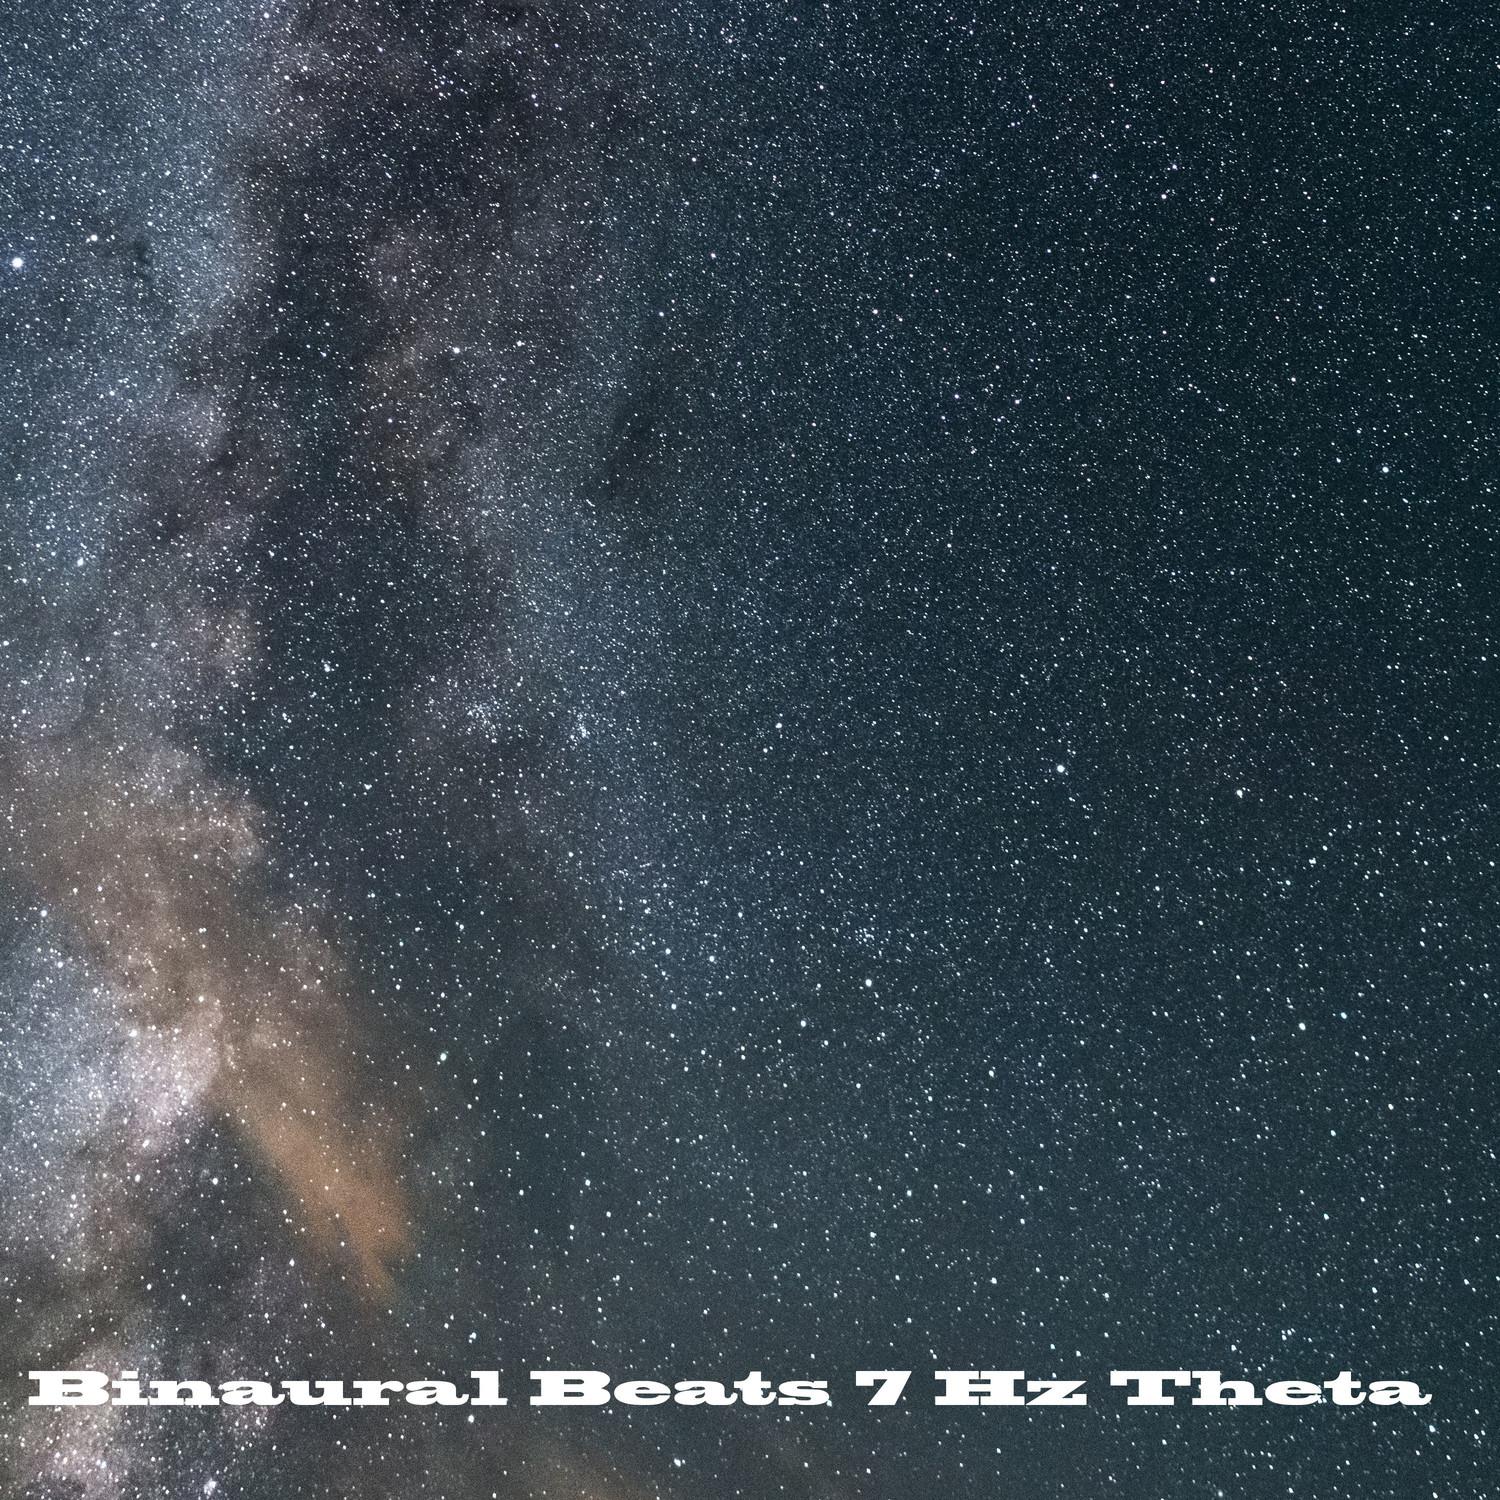 Between the Space - Binaural Beats 7 Hz Theta Waves